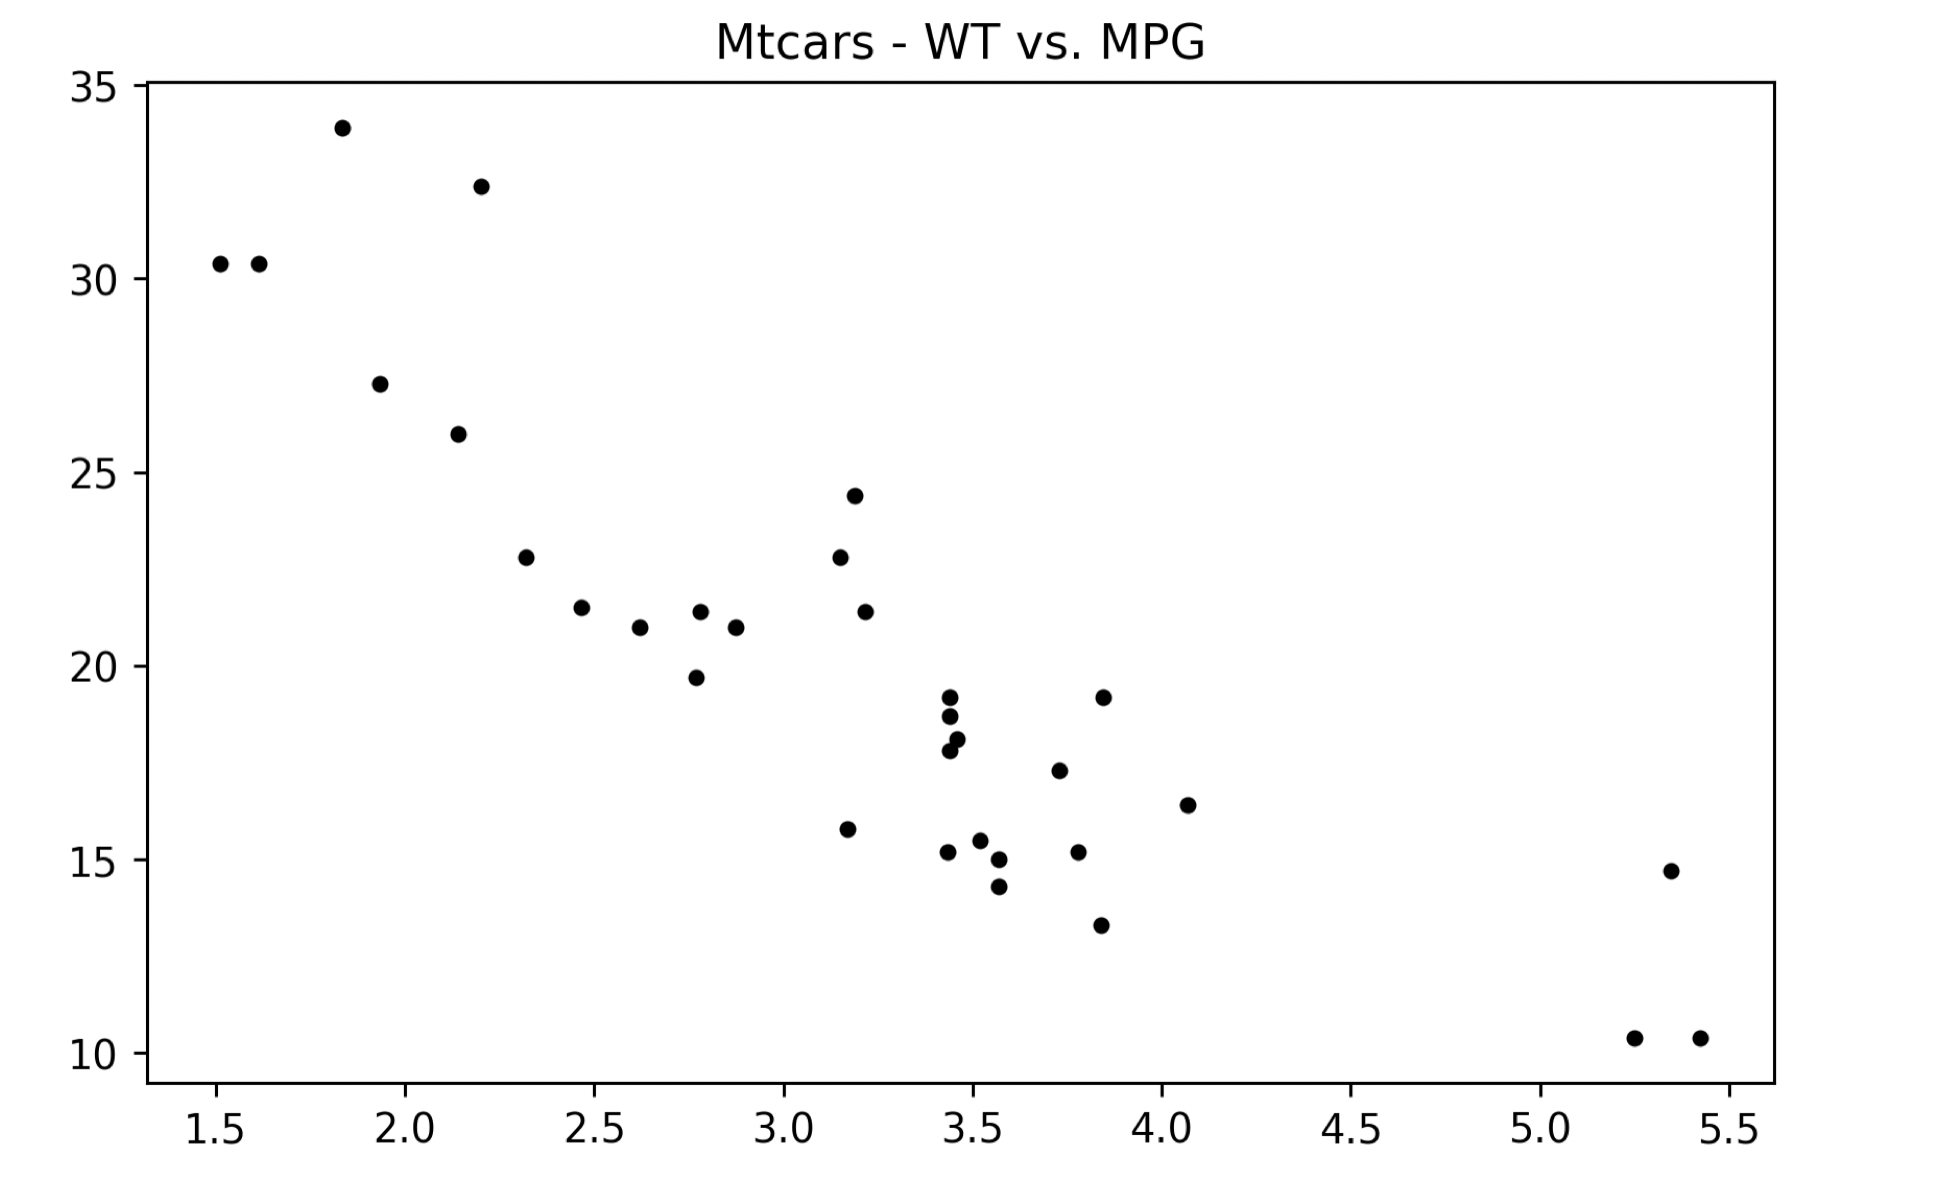 Image 11 - Matplotlib chart in R Markdown